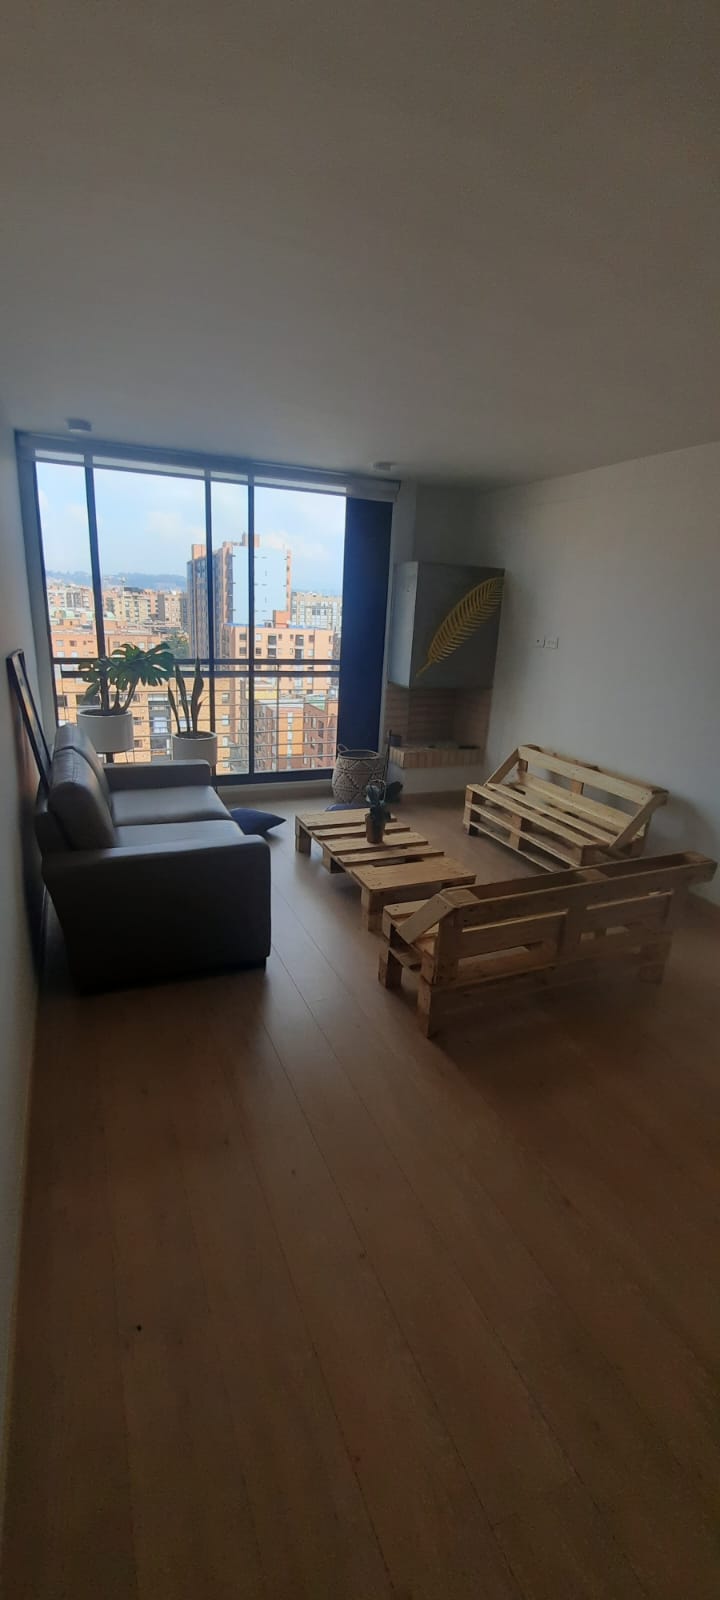 Foto Apartamento en Arriendo en Norte, Bogotá, Bogota D.C - $ 2.600.000 - doAREI47444 - BienesOnLine